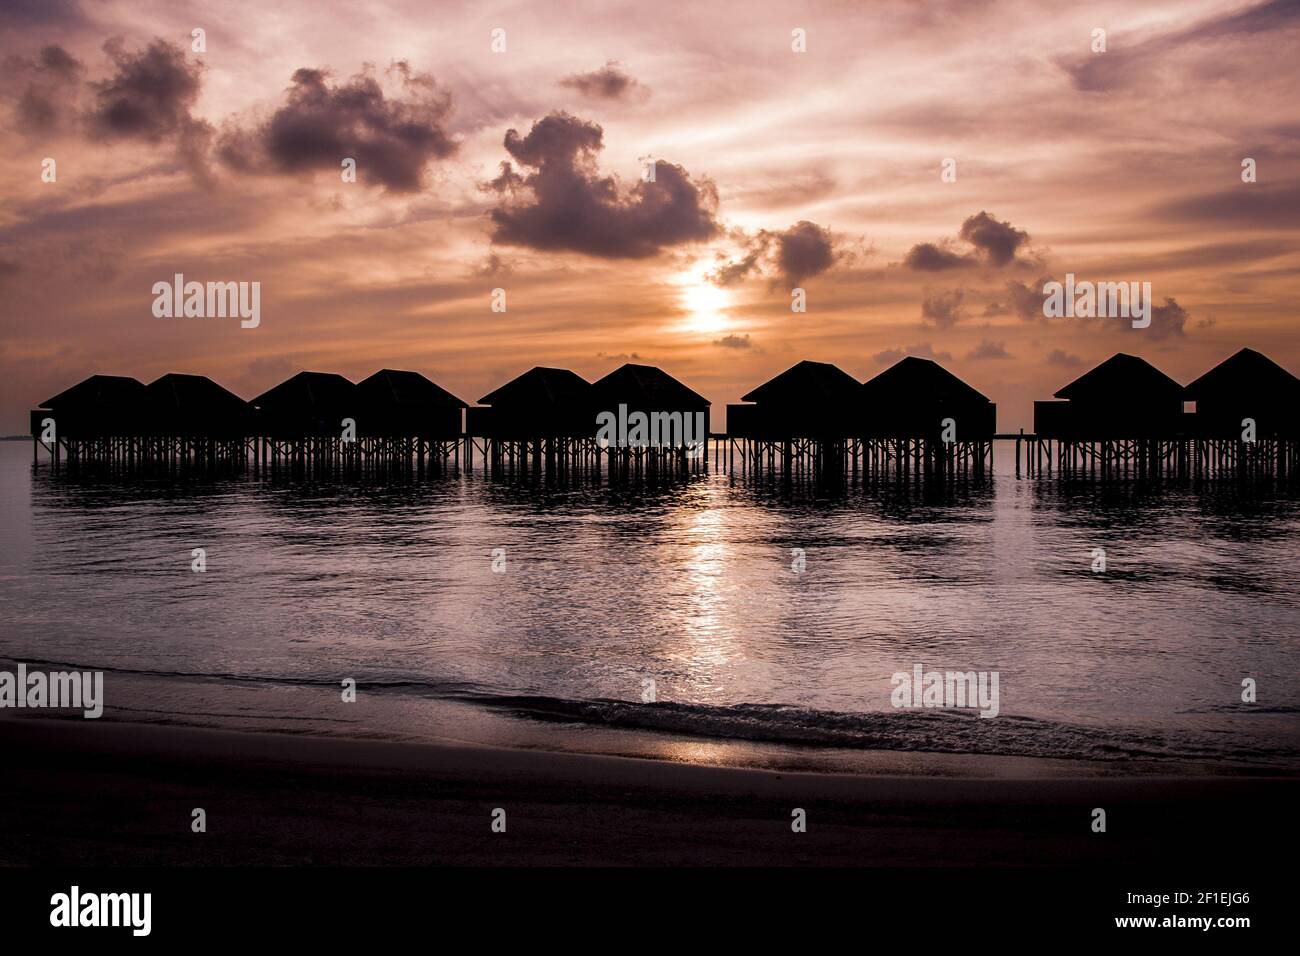 Malediven-Sonnenuntergang mit Wasser Villen silhouette Stockfoto